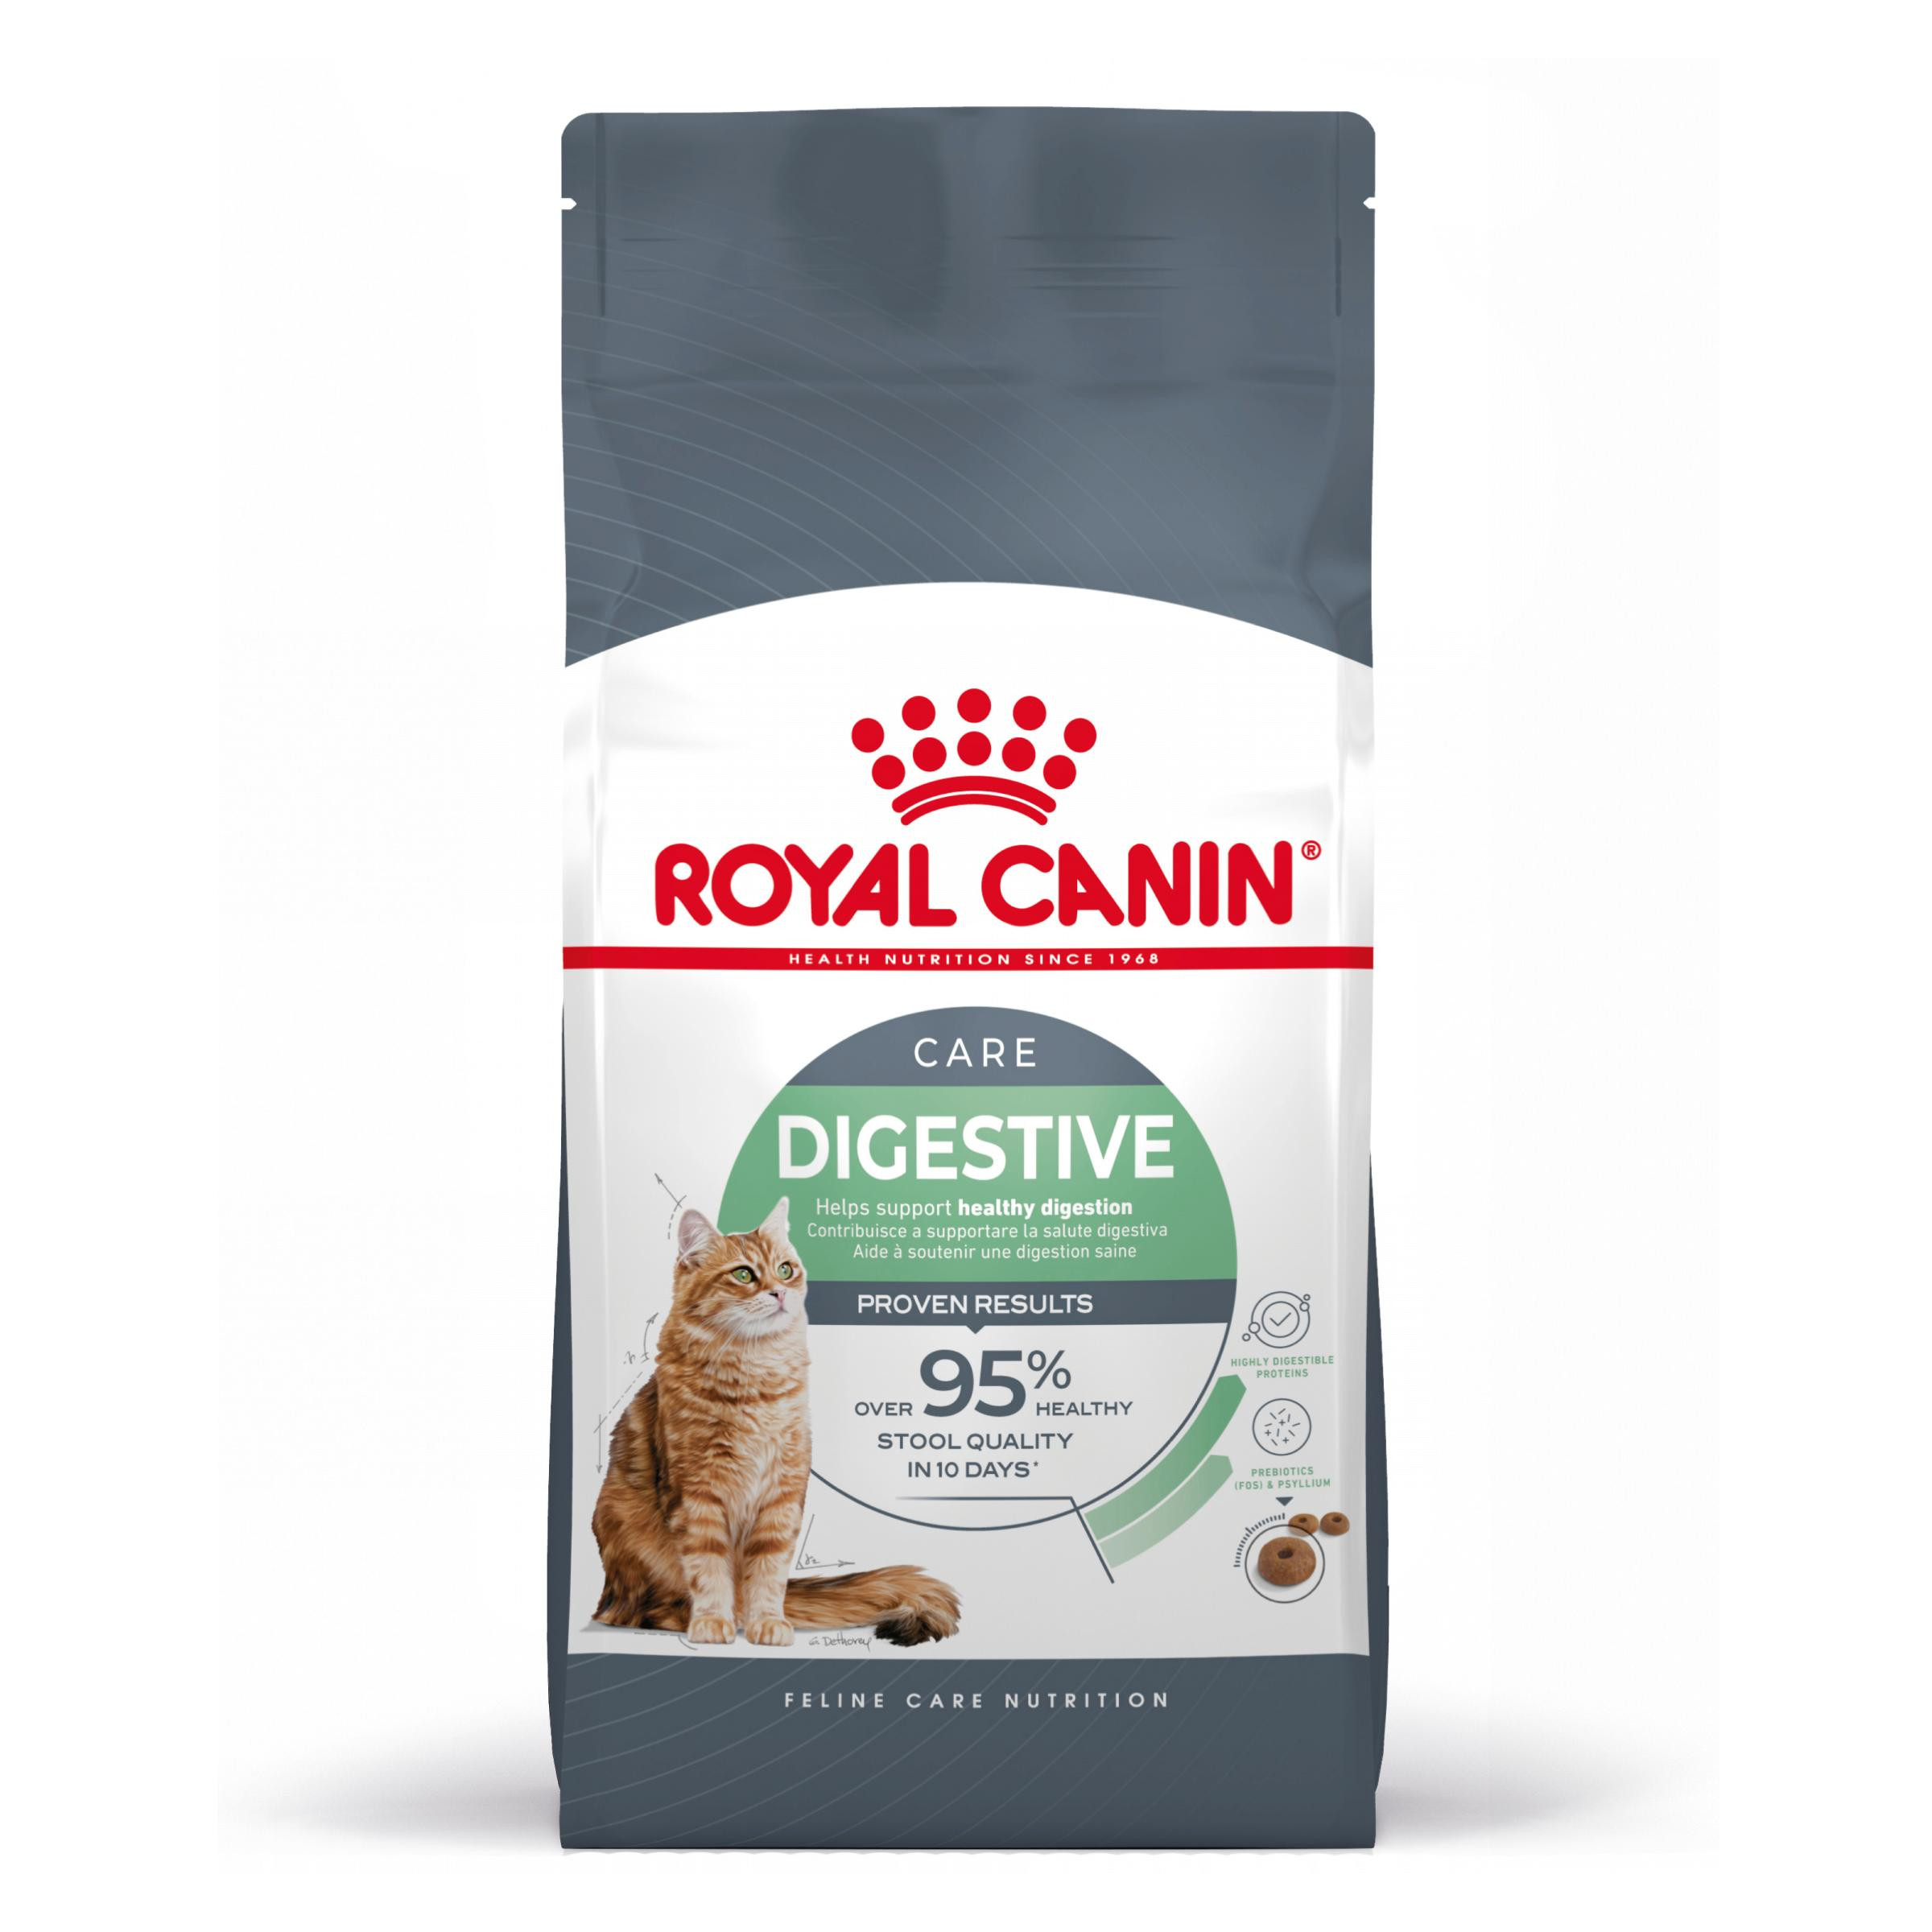 Bild von 4 kg Royal Canin Digestive Care Katzenfutter